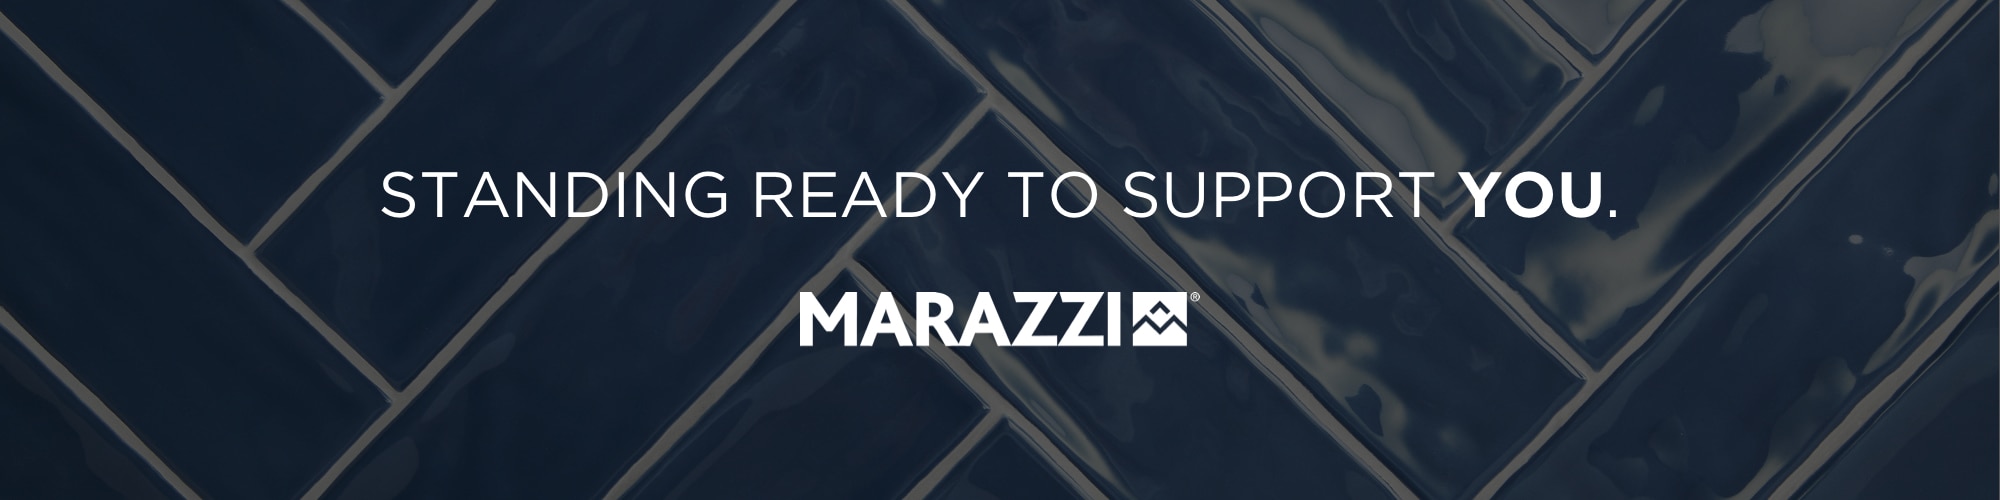 MZ_support_banner